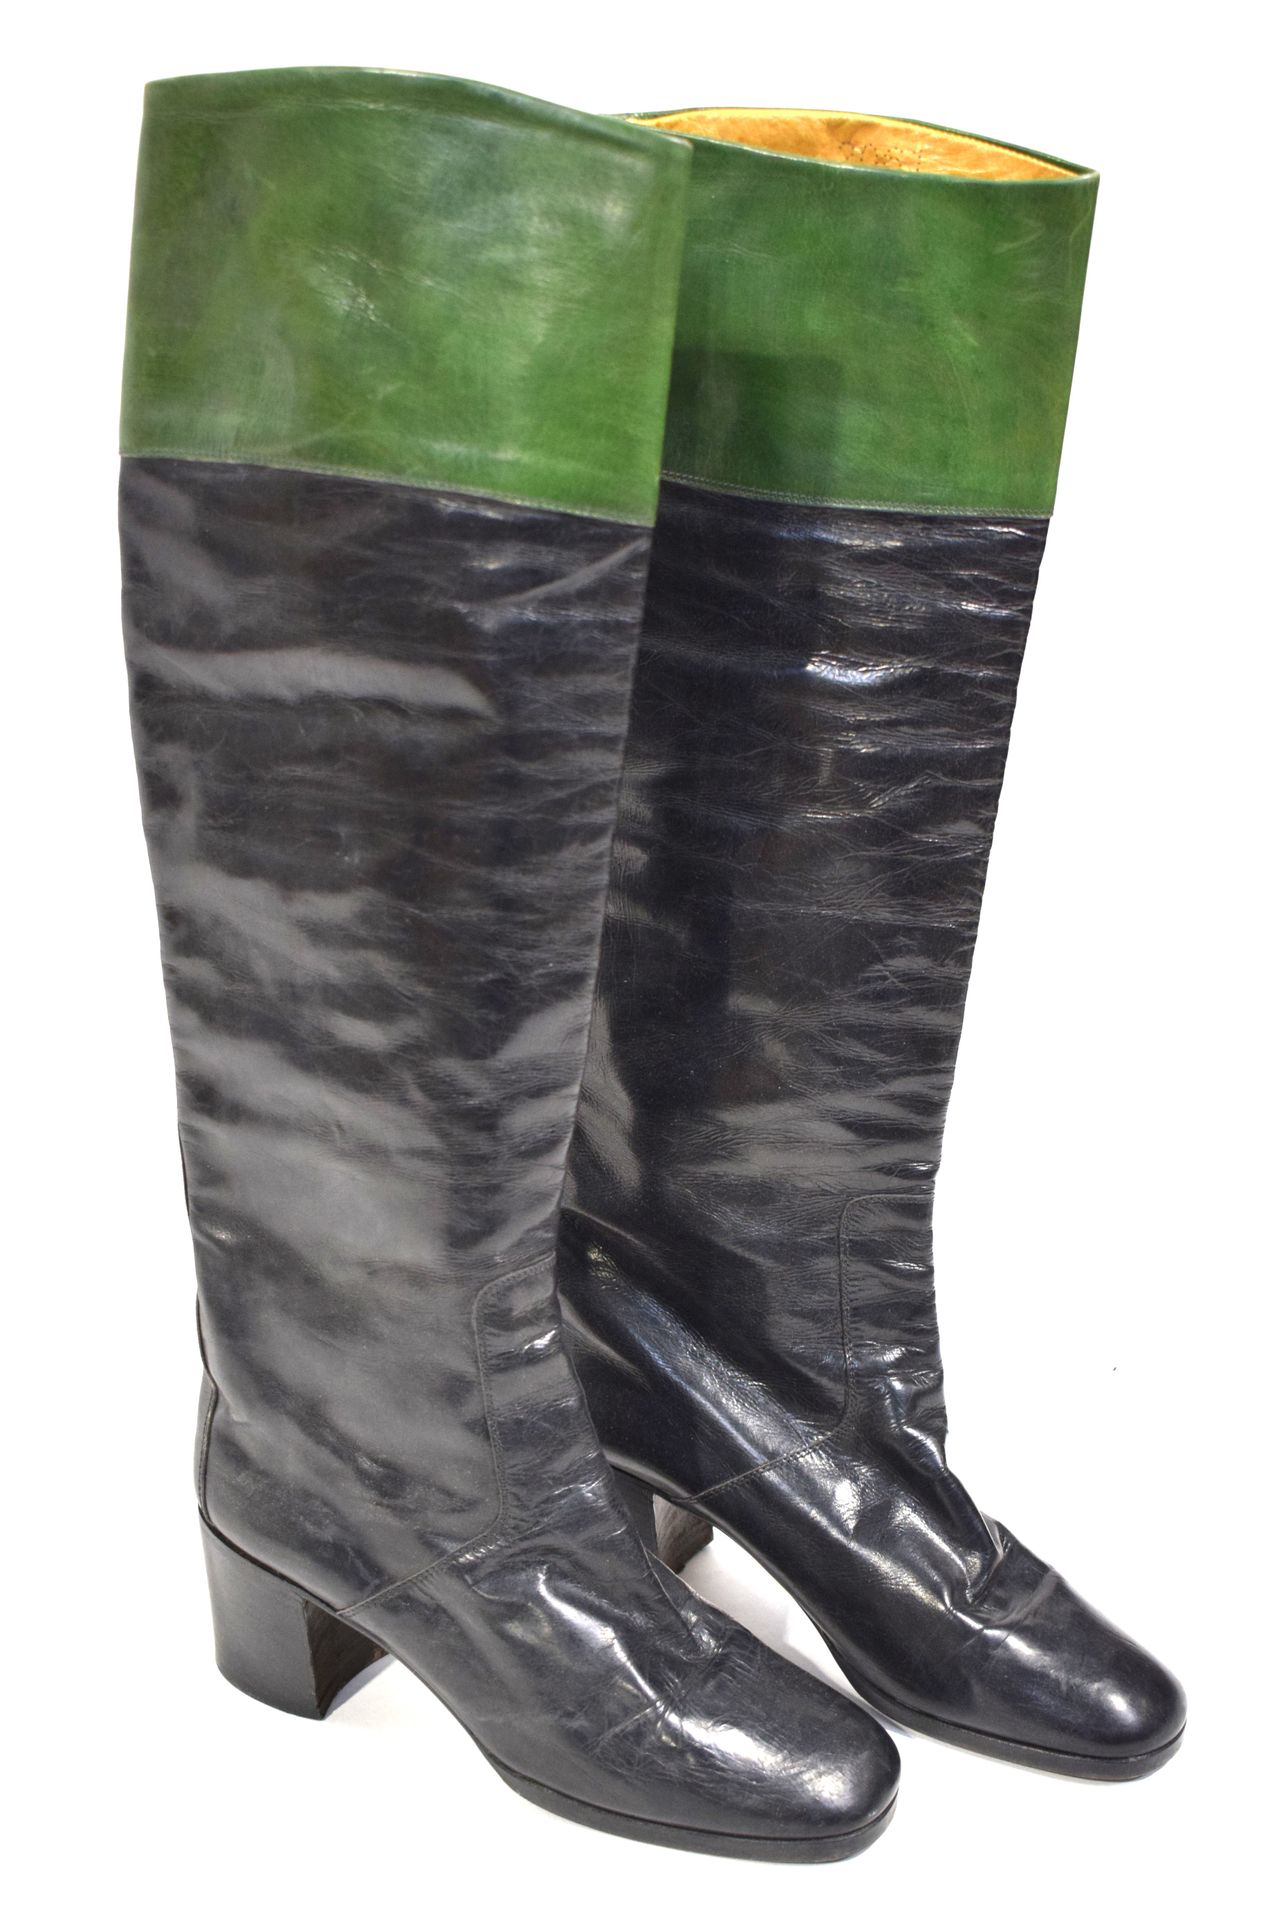 Null 弗朗索瓦-维隆
一双黑色皮靴，绿色皮顶带，40码，使用状况